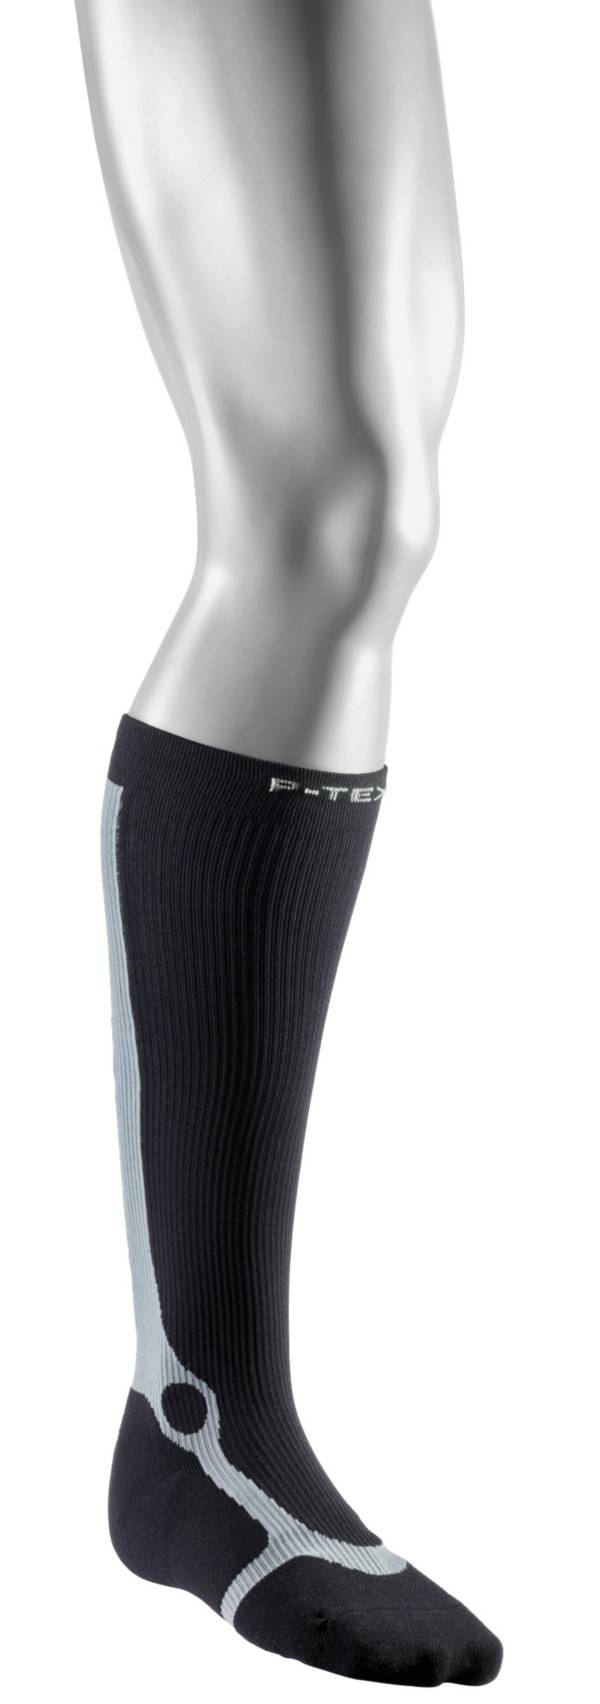 P-TEX PRO Knit Compression Socks product image